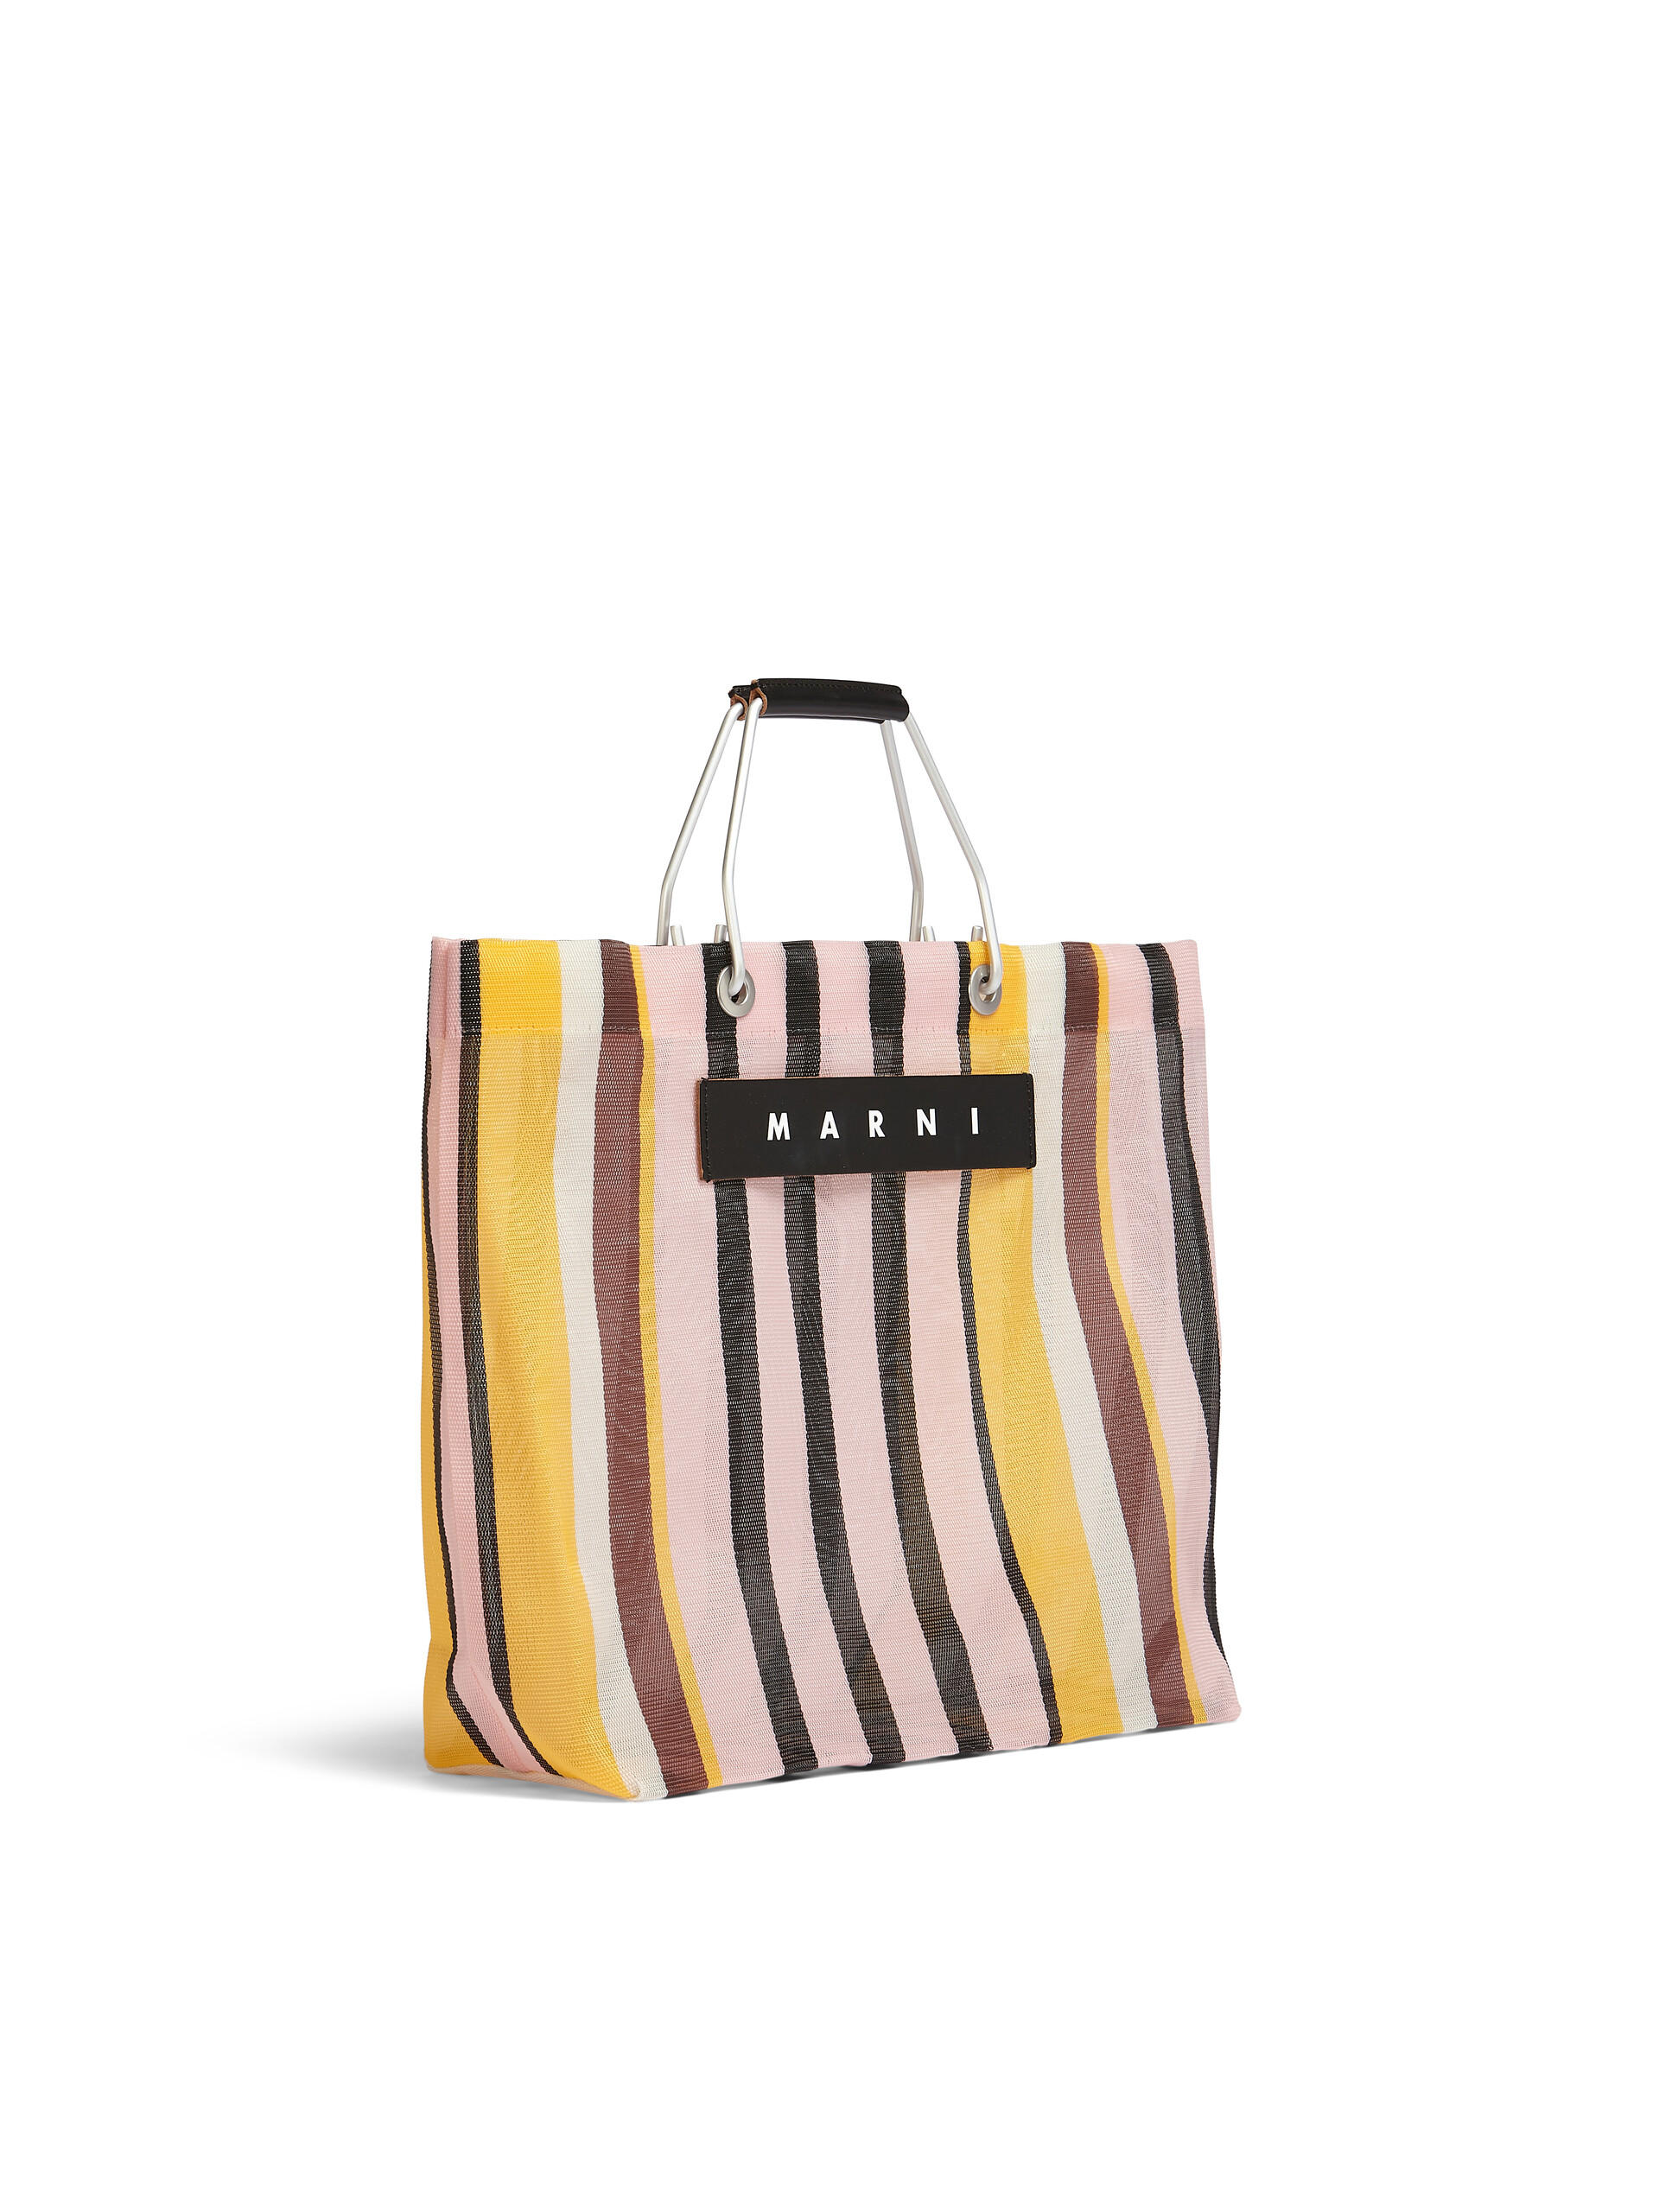 MARNI MARKET STRIPE multicolor pink medium bag - Bags - Image 2